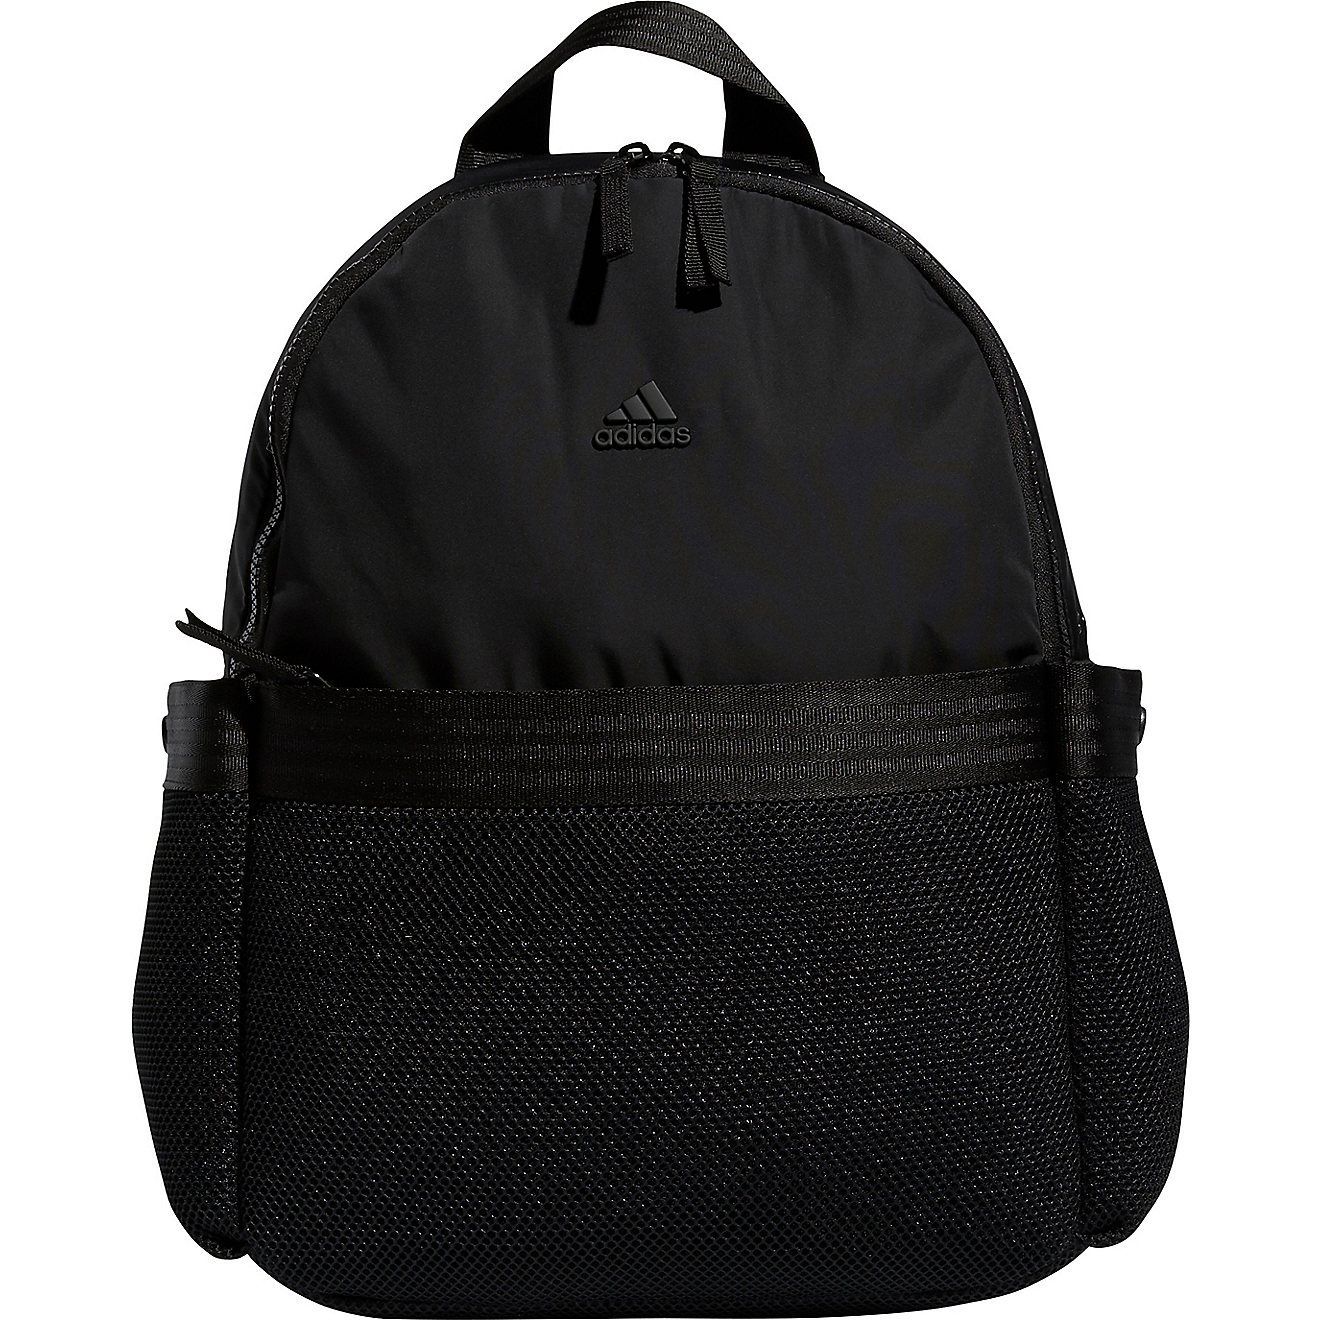 adidas VFA III Backpack | Academy | Academy Sports + Outdoors